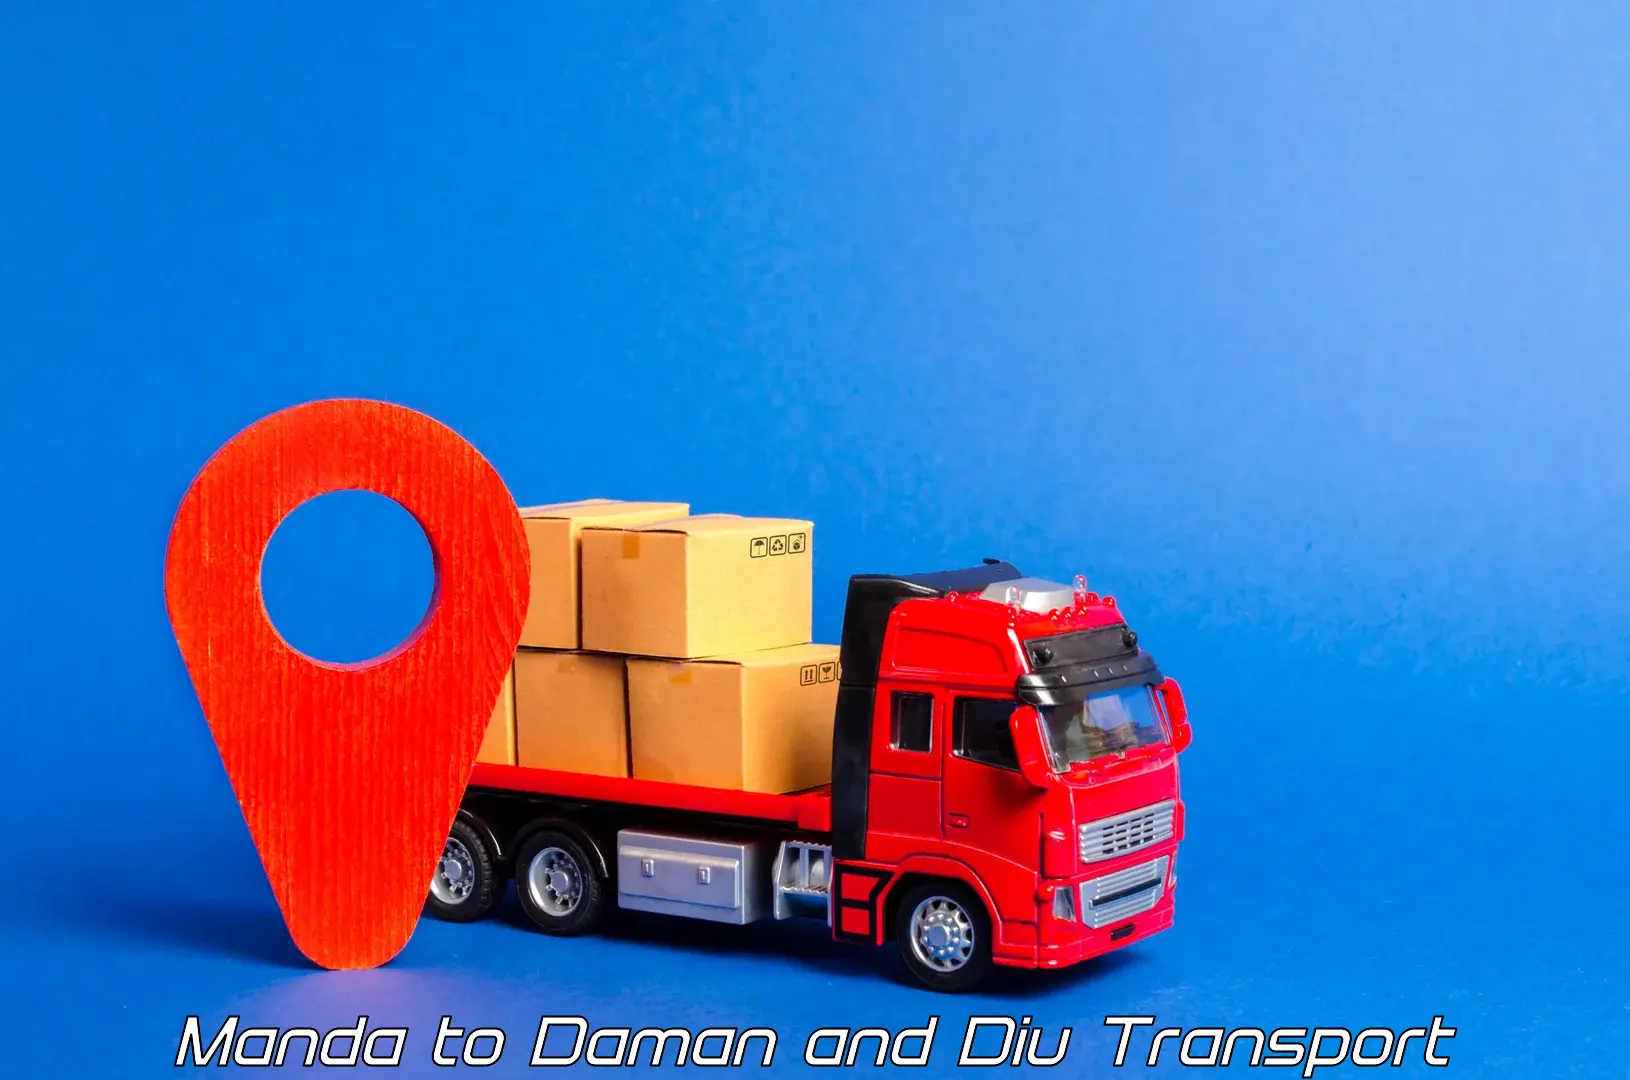 Daily transport service Manda to Daman